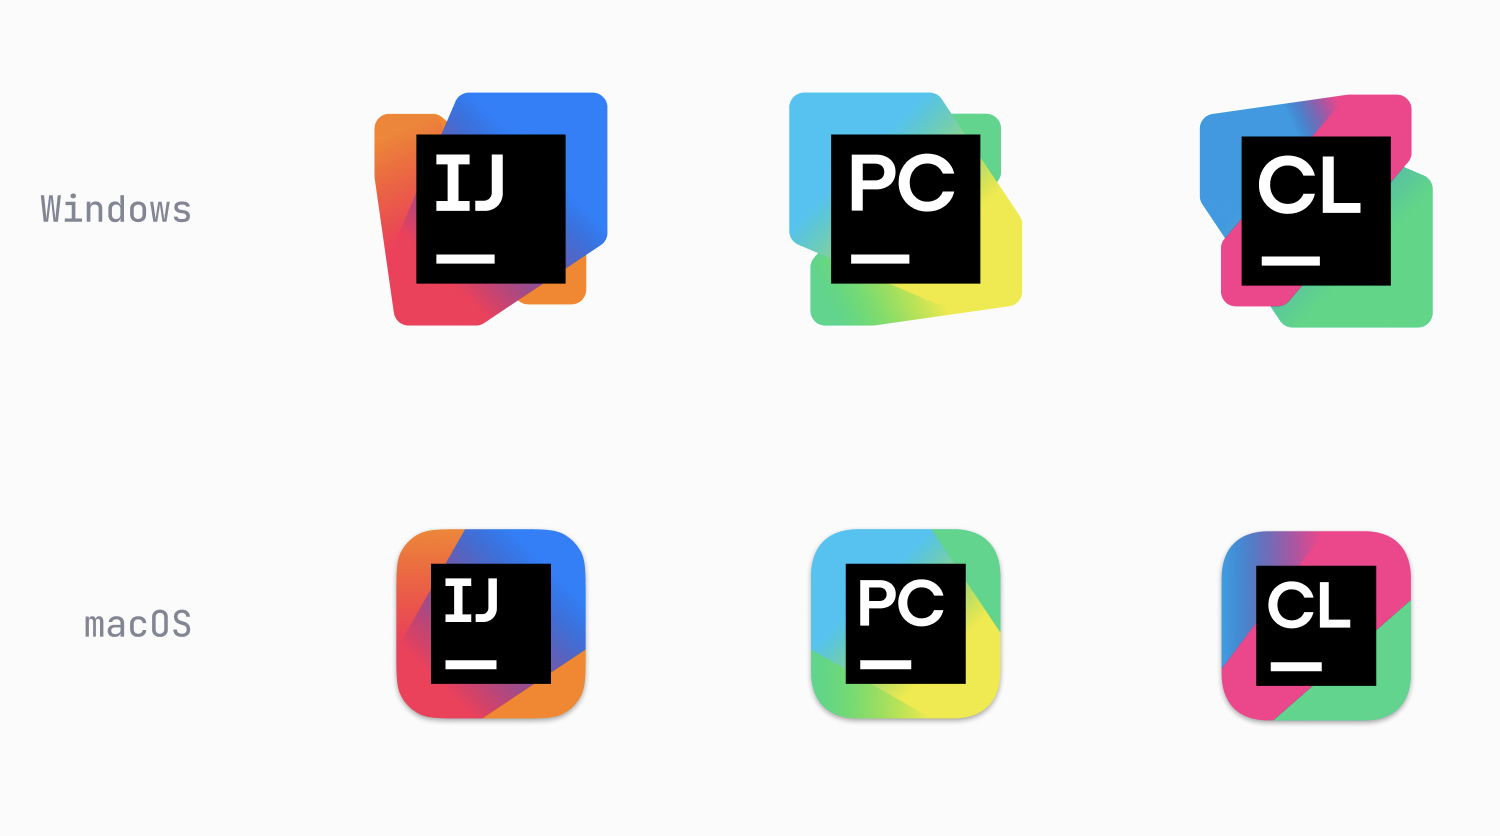 New icons